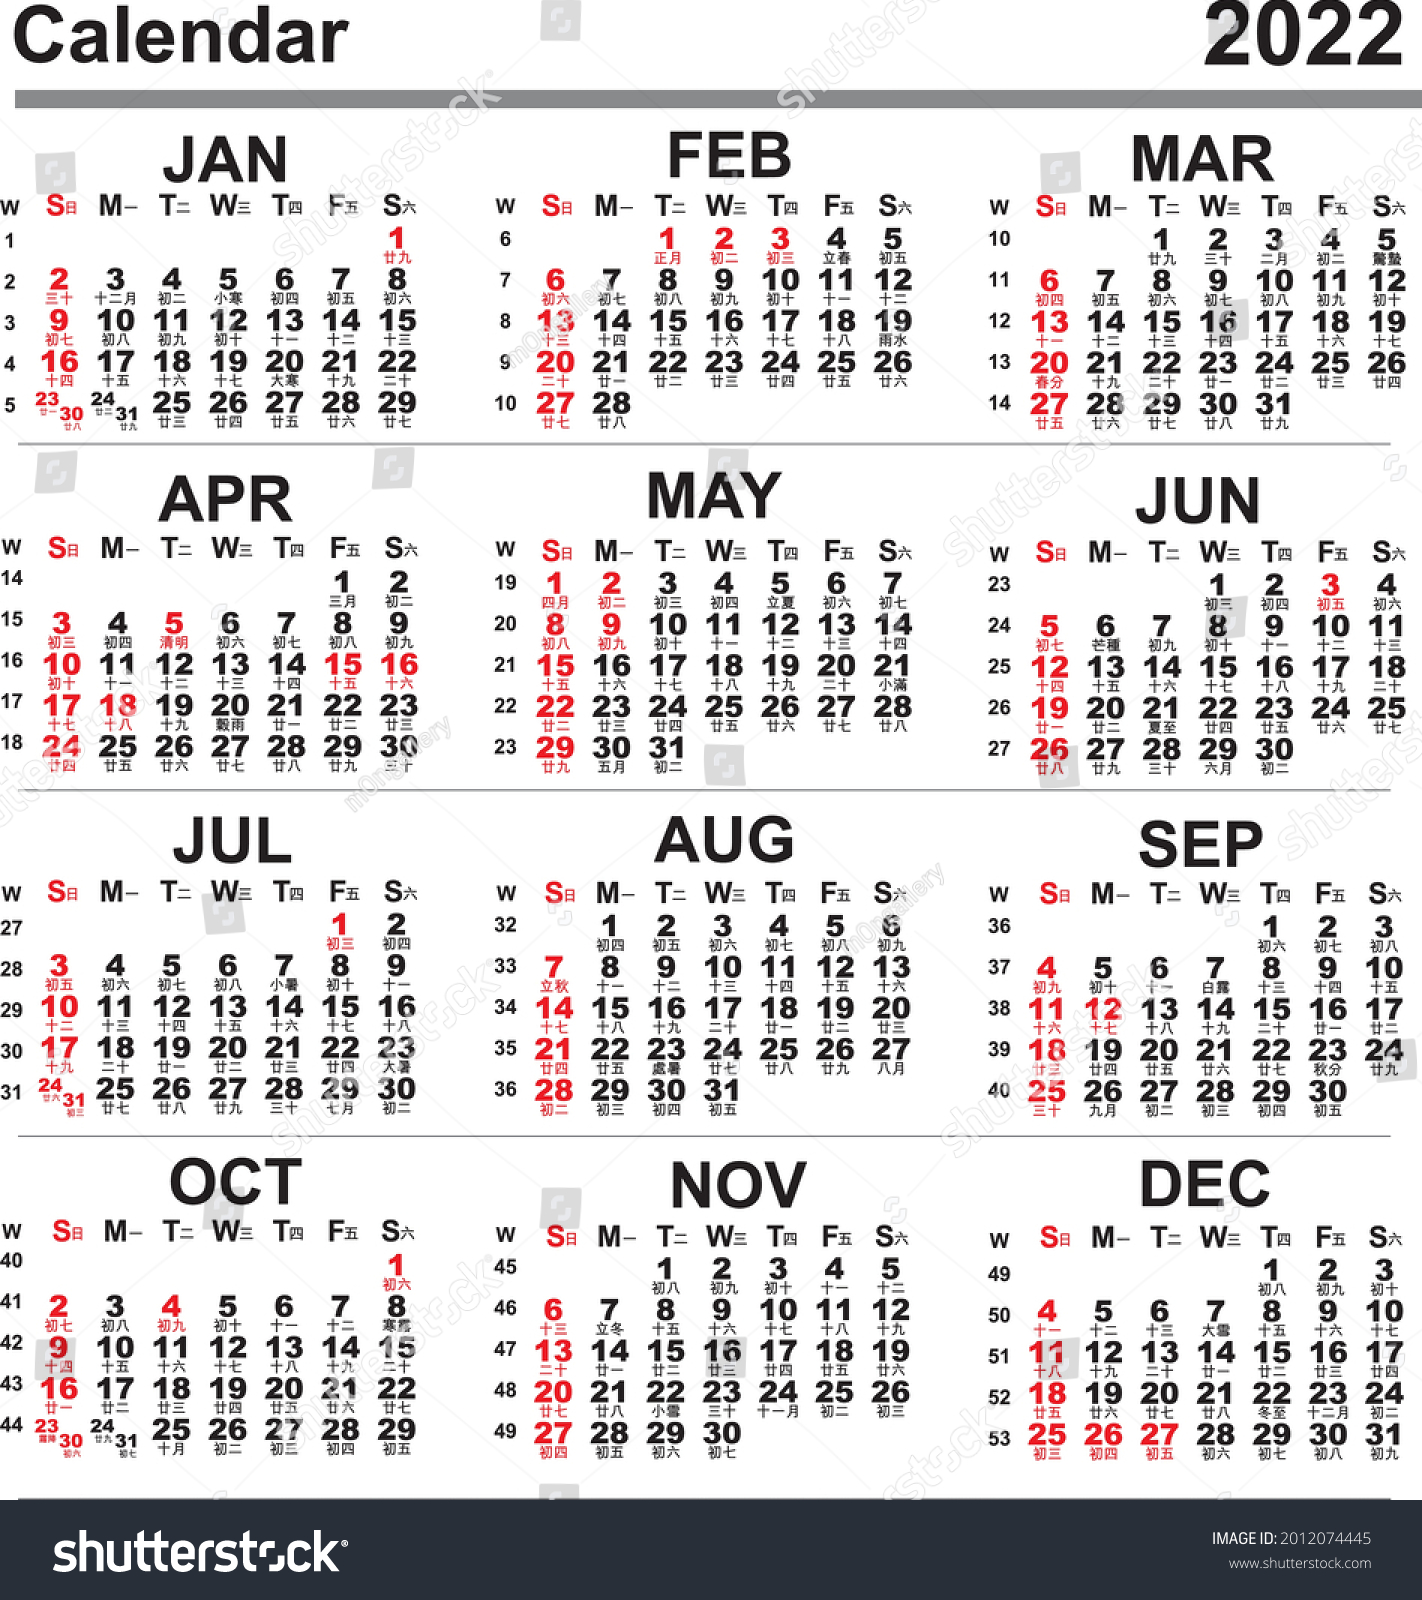 kalender-2022-mit-hongkong-public-holiday-stock-vektorgrafik-lizenzfrei-2012074445-shutterstock